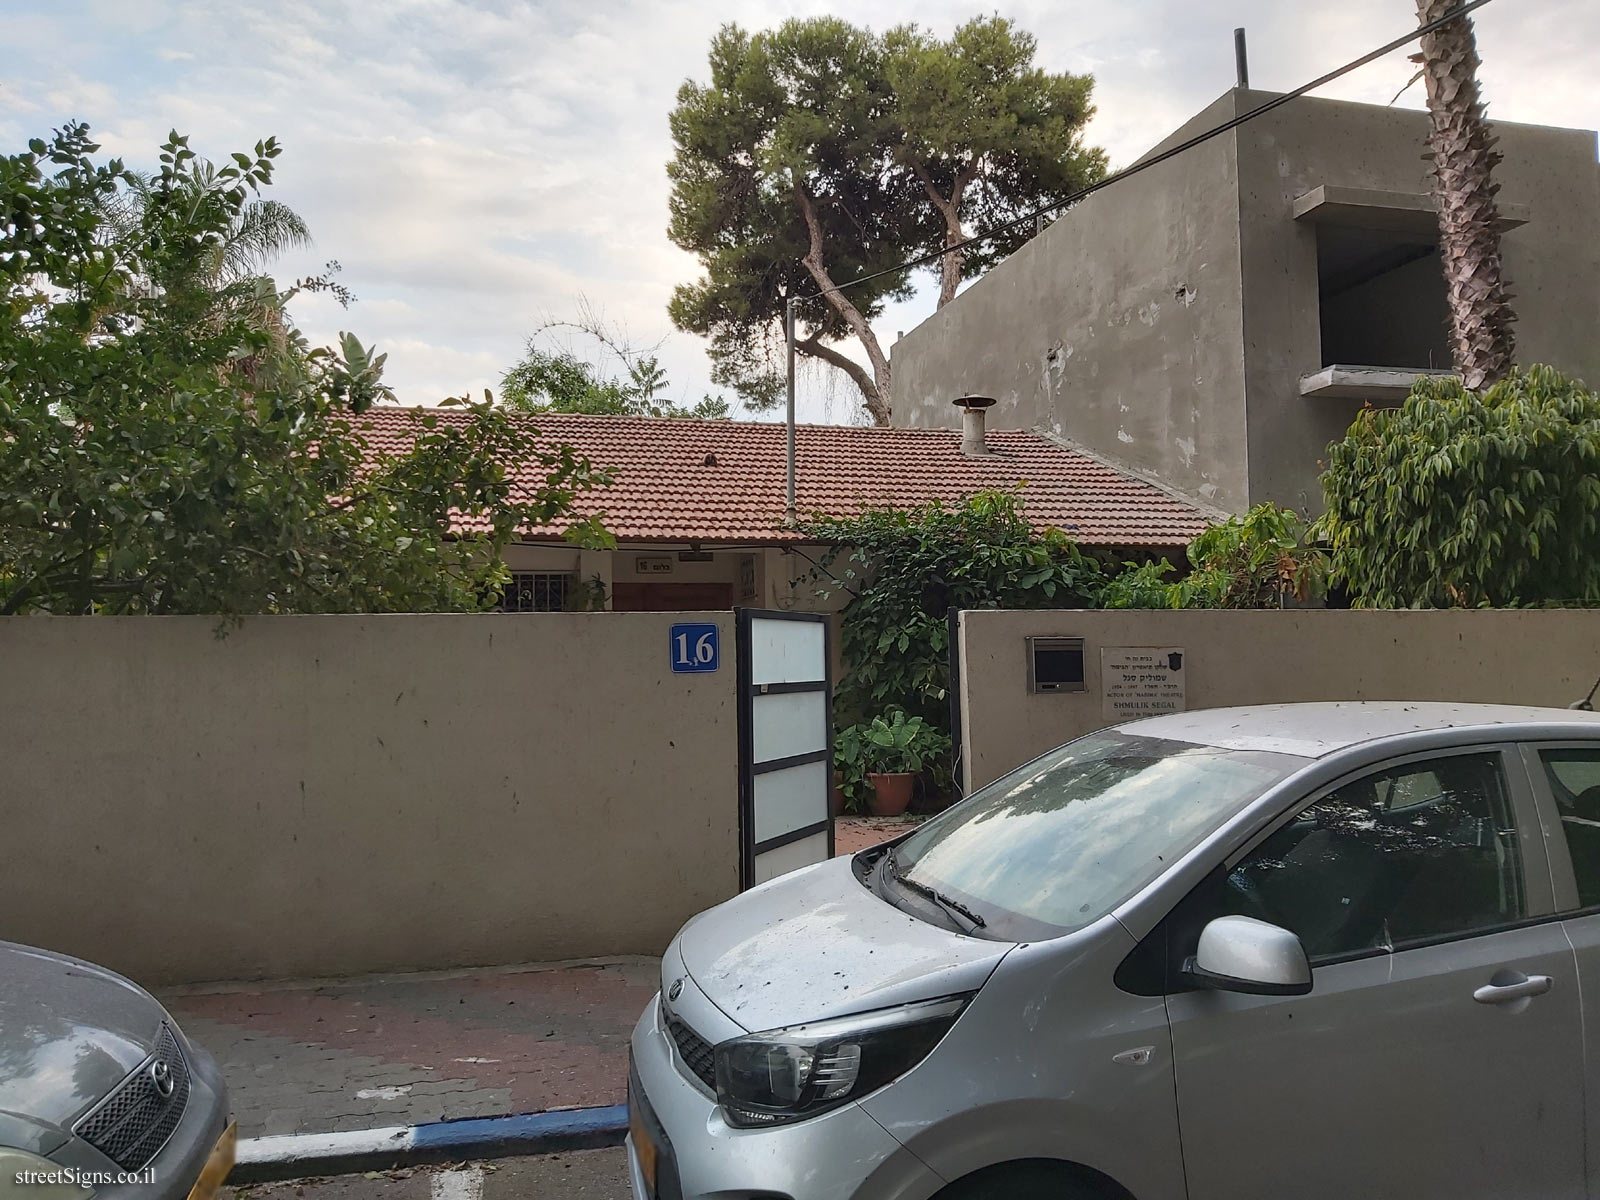 The house of Shmulik Segal - Leon Blum St 16, Tel Aviv-Yafo, Israel